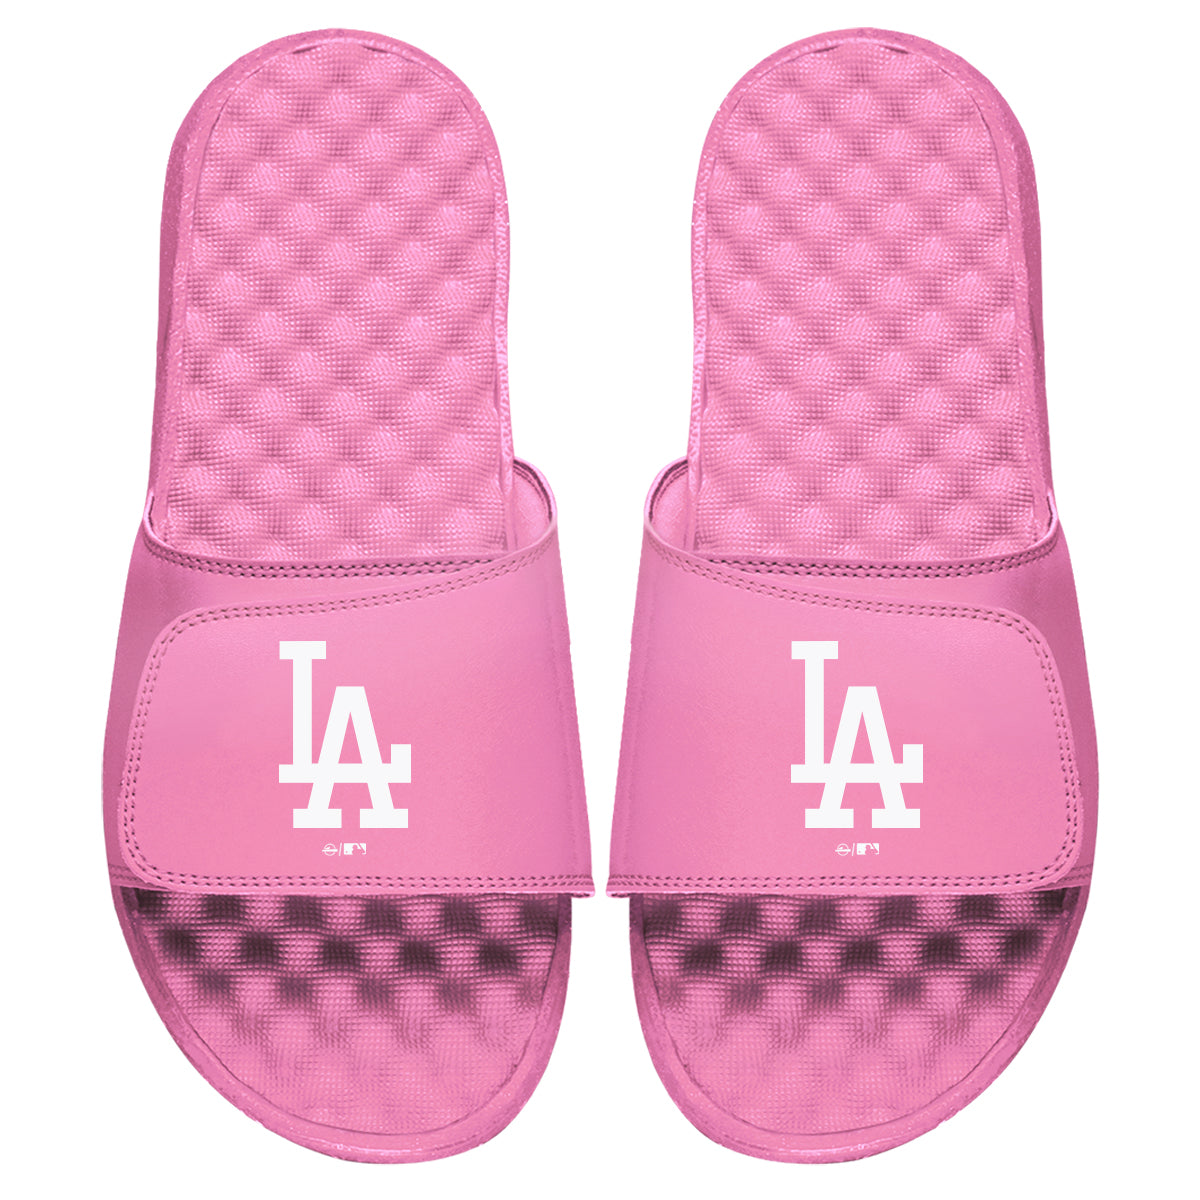 Los Angeles Dodgers Primary Pink Slides